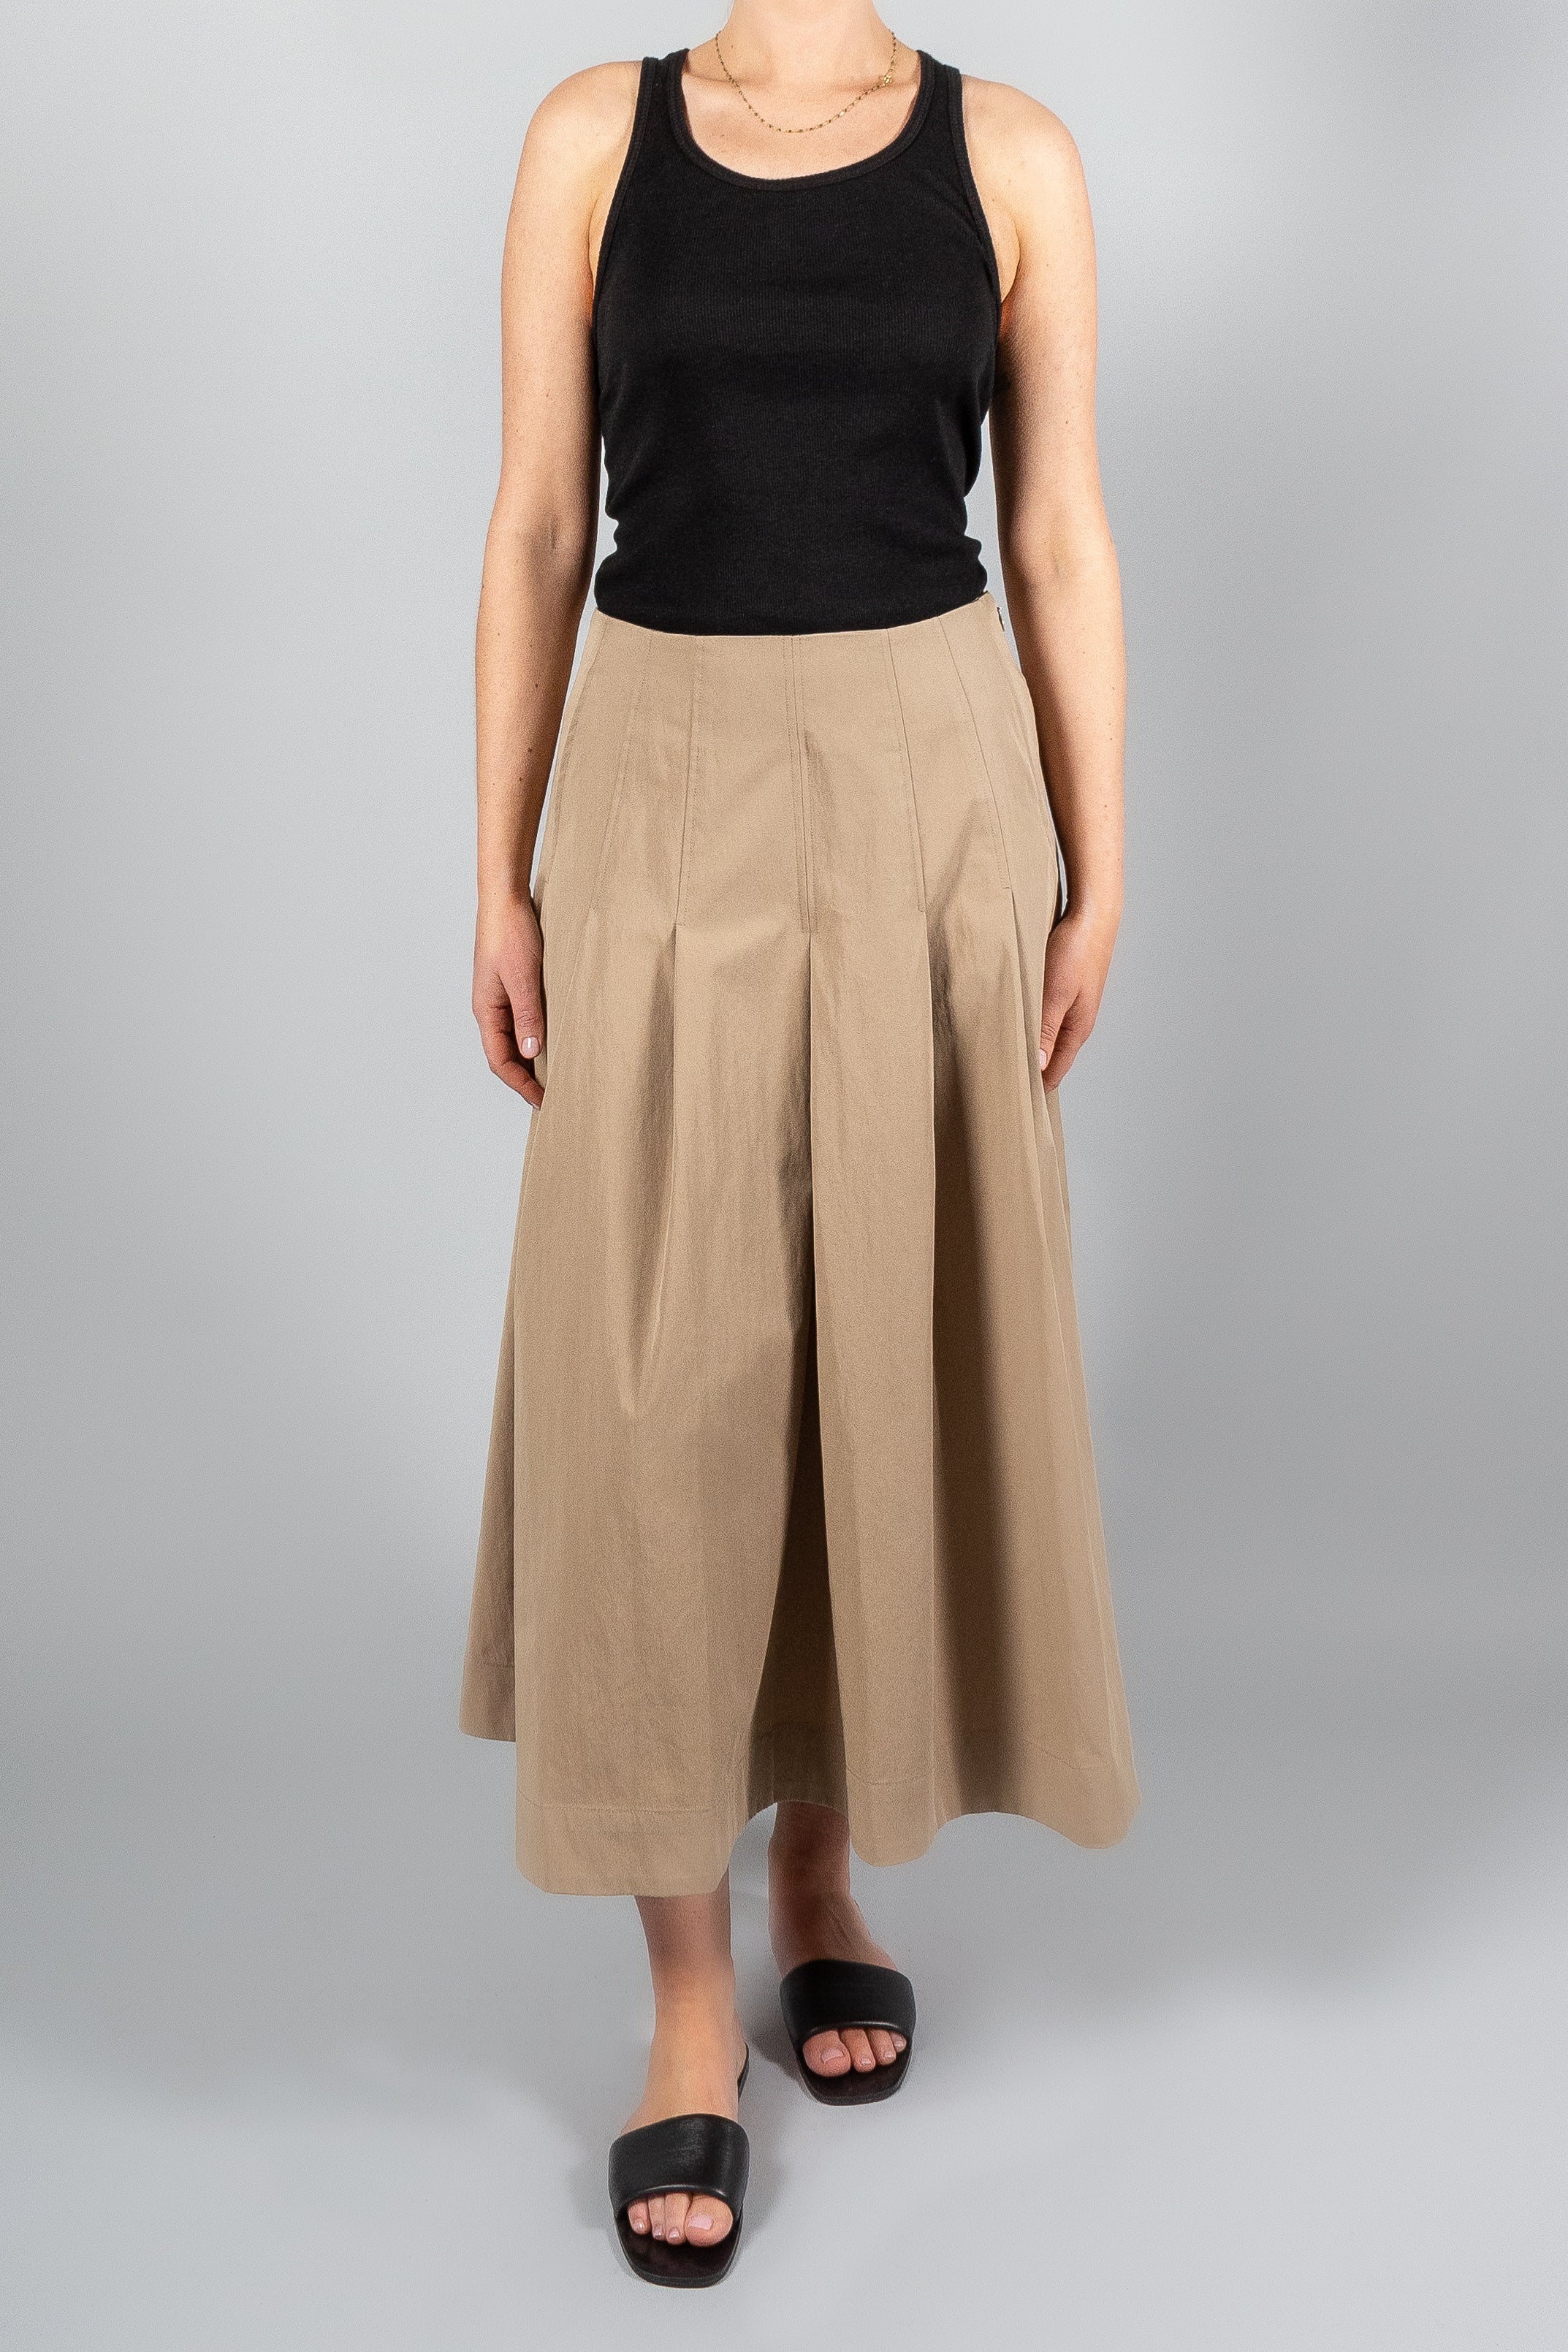 Kallmeyer Dakota Pleated Skirt-Skirts-Misch-Boutique-Vancouver-Canada-misch.ca